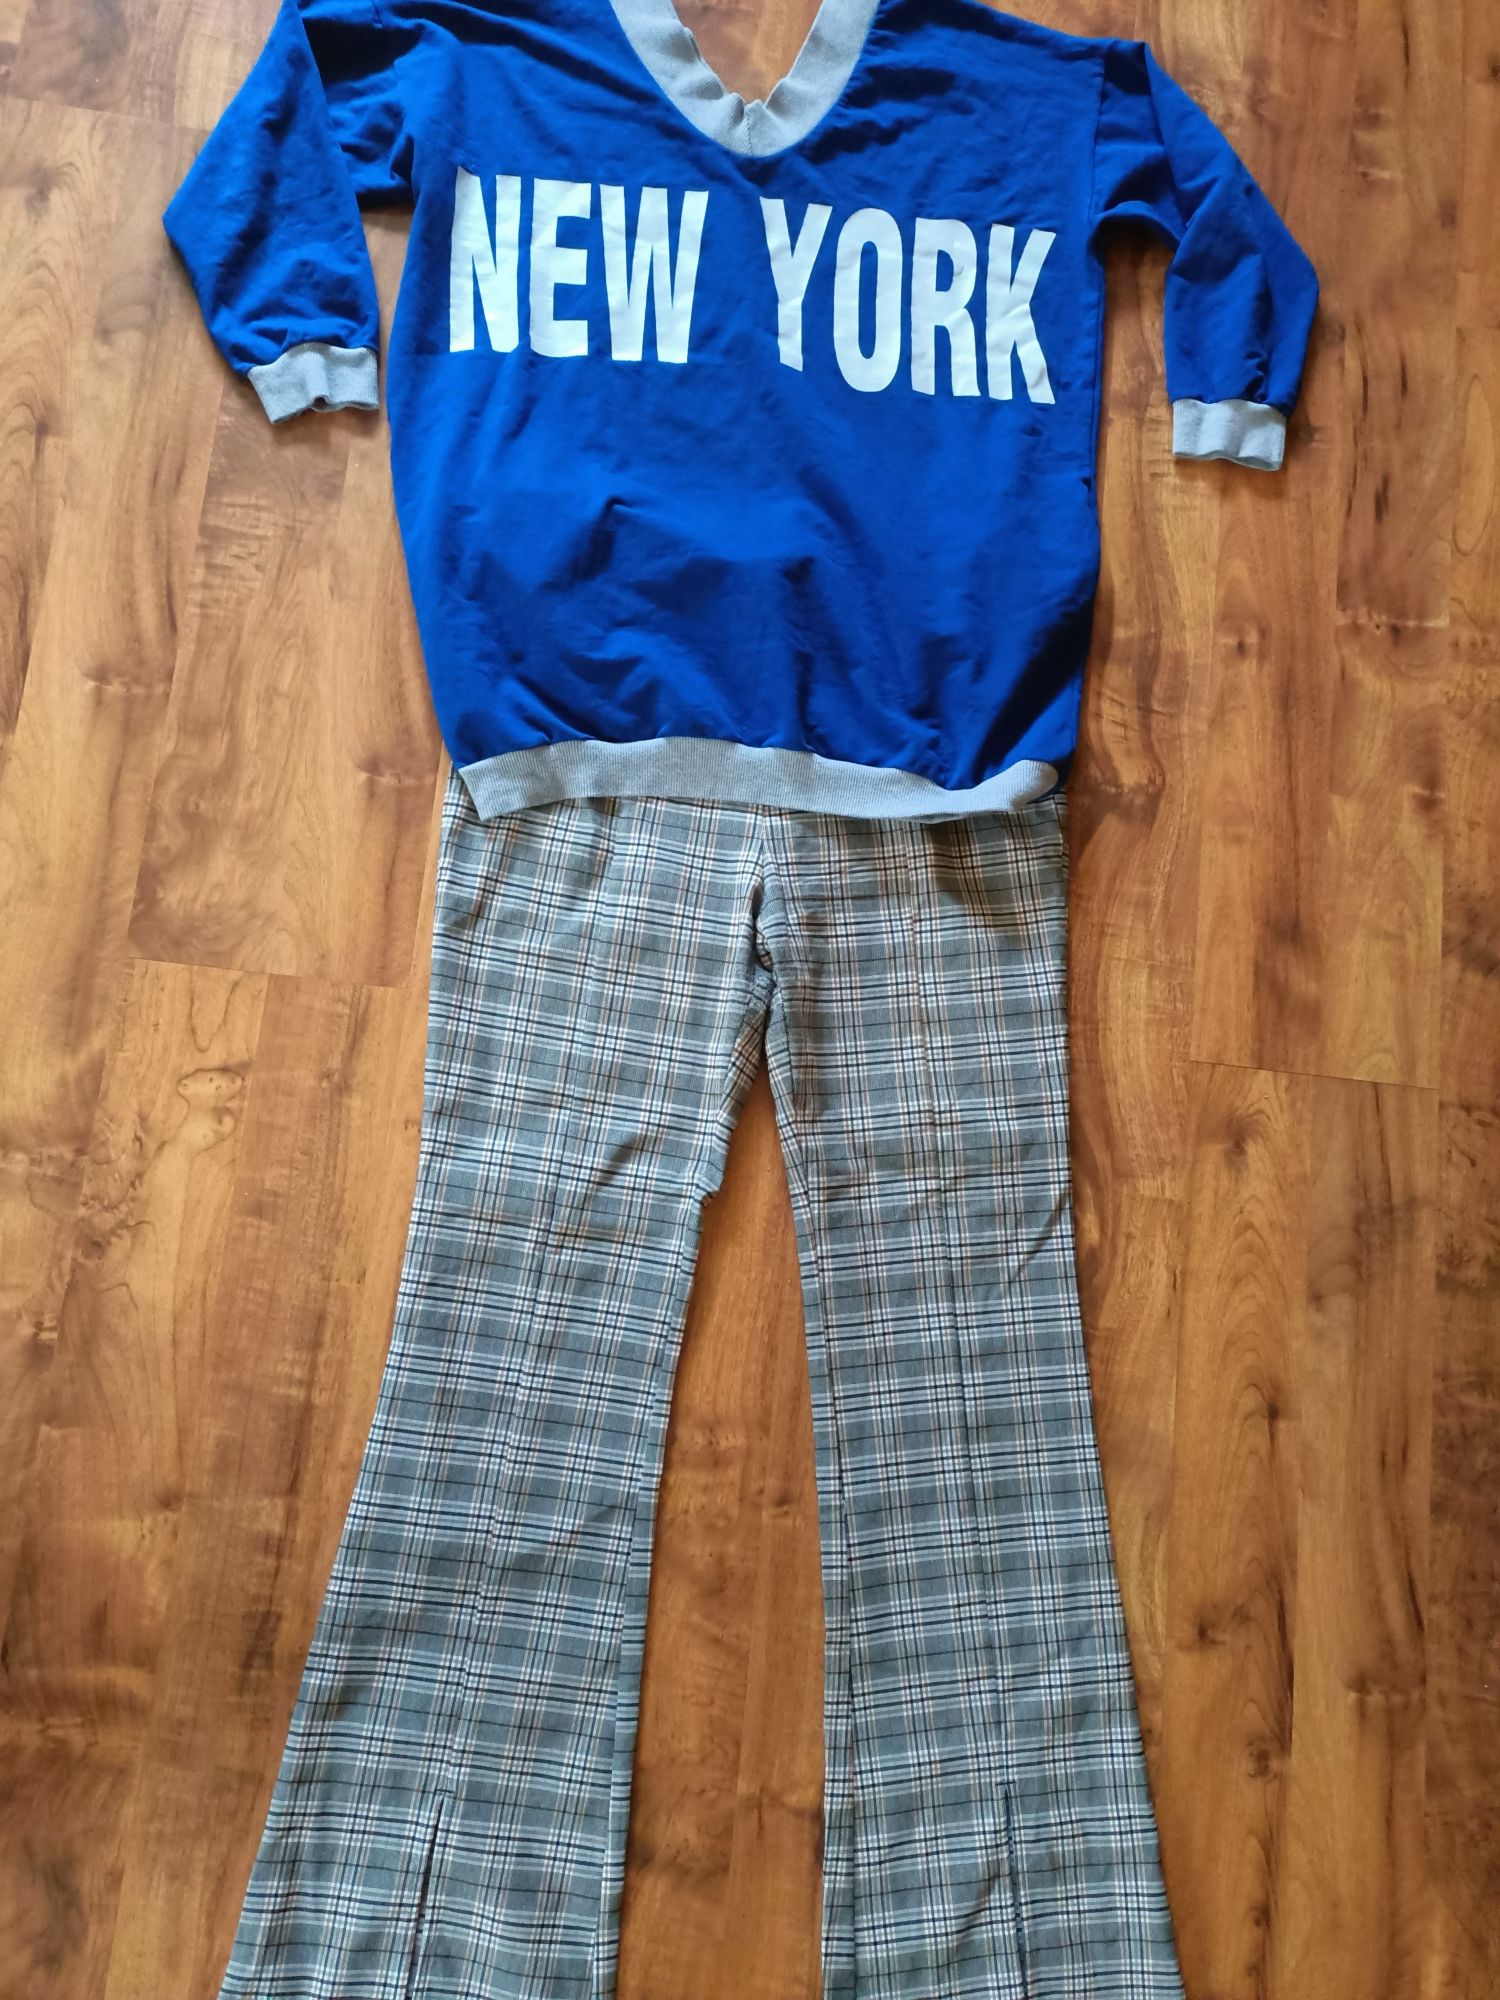 Bluza oversize New York, komplet, spodnie C&A Clockhouse 42 + gratis